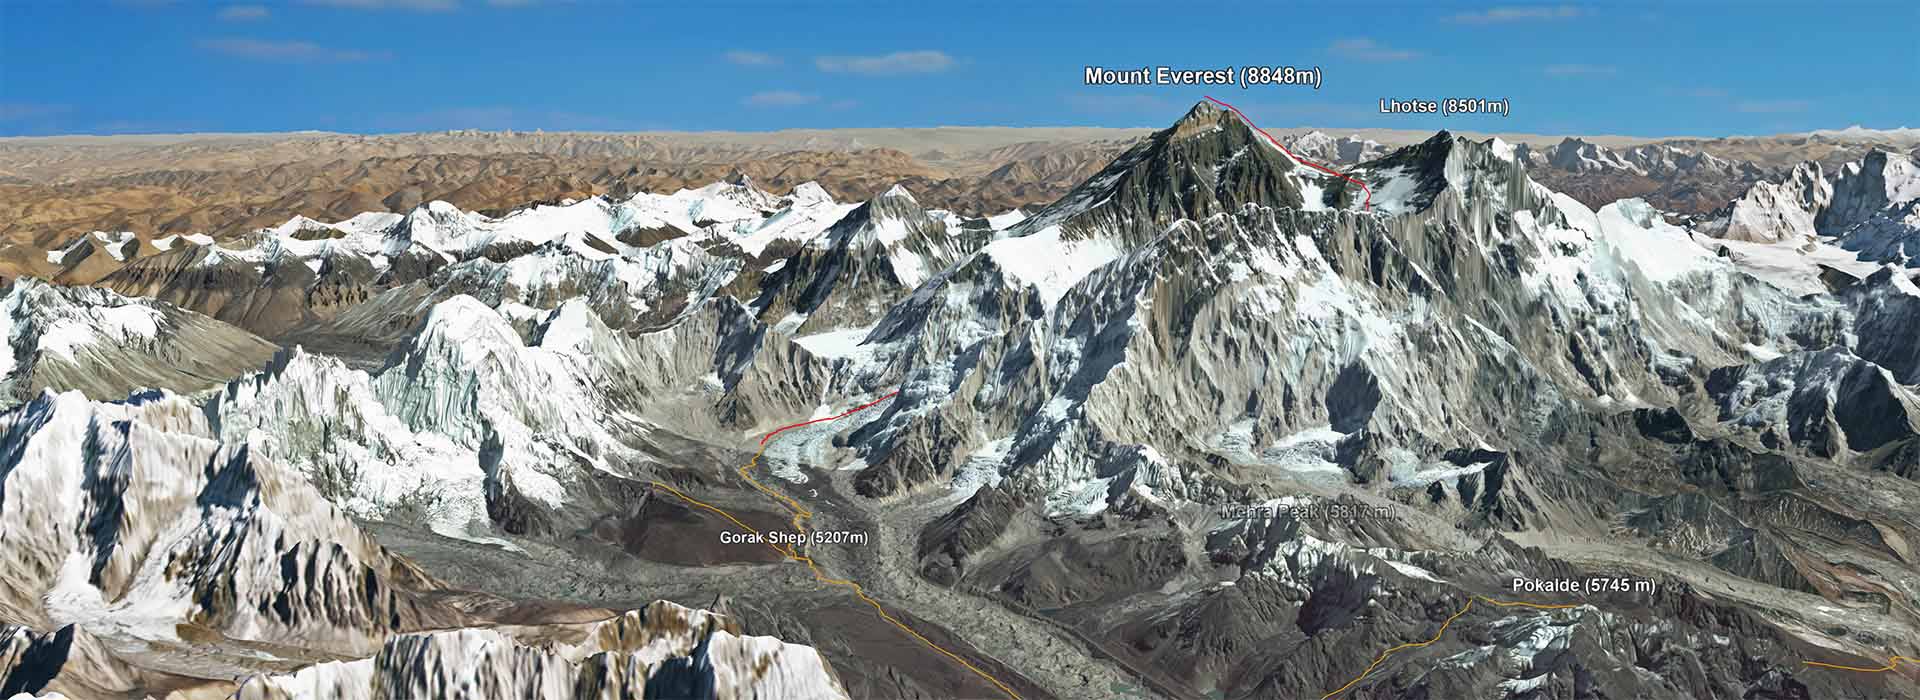 Mount Everest by roguetide on DeviantArt